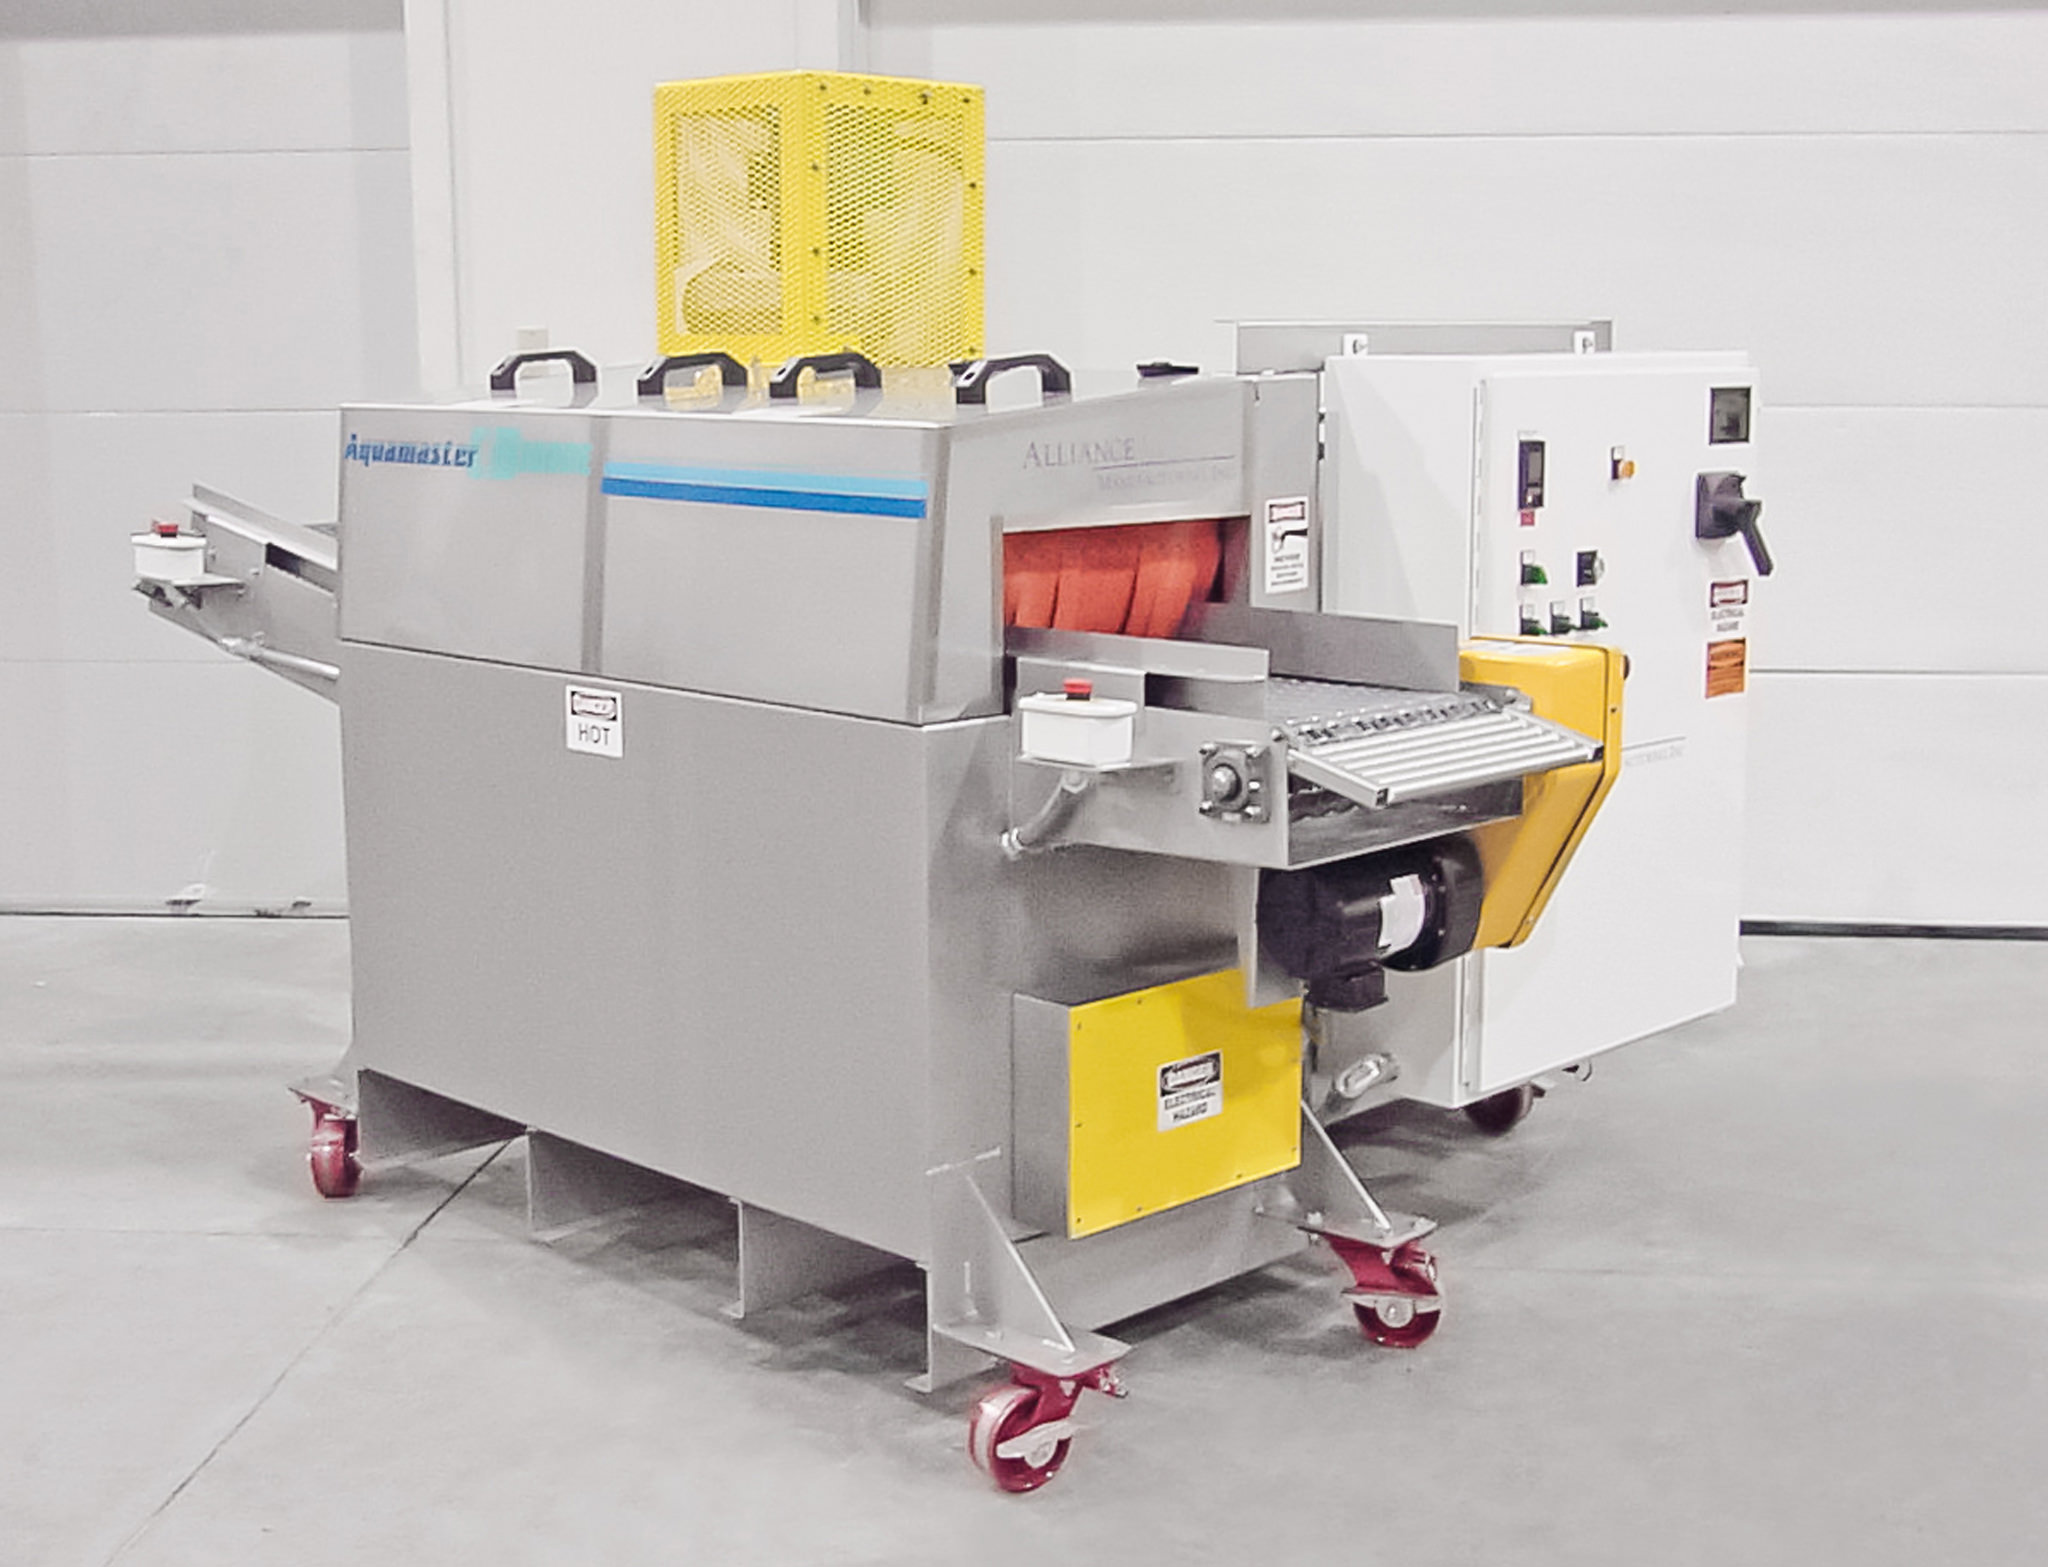 Dryer unit for manufactured automotive components